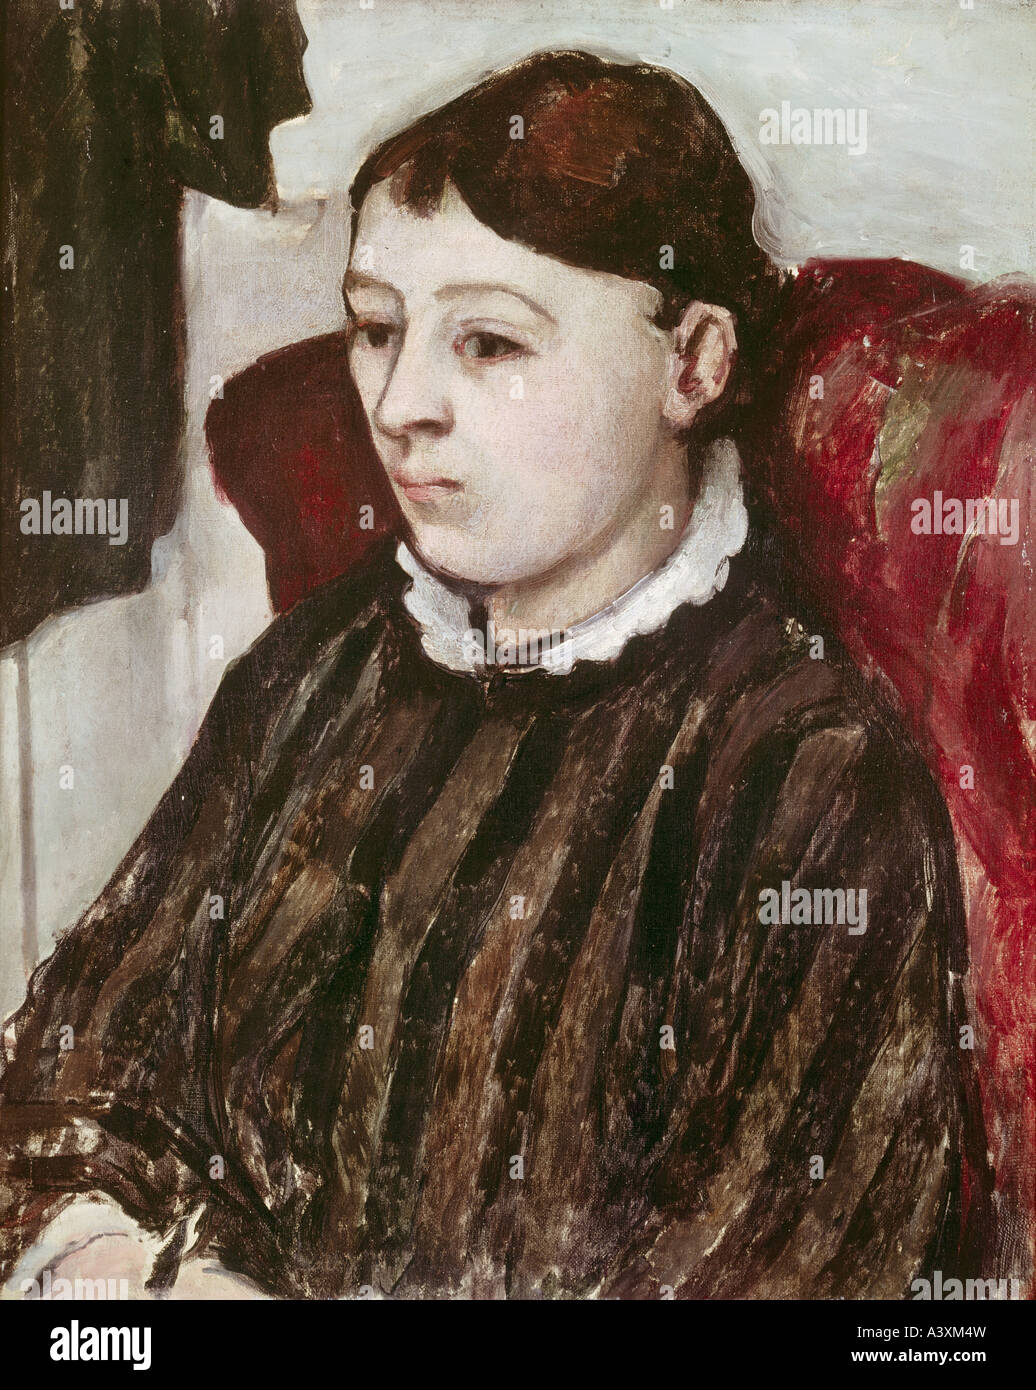 "Bellas Artes, Cezanne, Paul (19.1.1839 - 22.10.1906), pintura, 'Madame Cezanne', circa 1883/1885), óleo sobre lienzo, privado coll Foto de stock